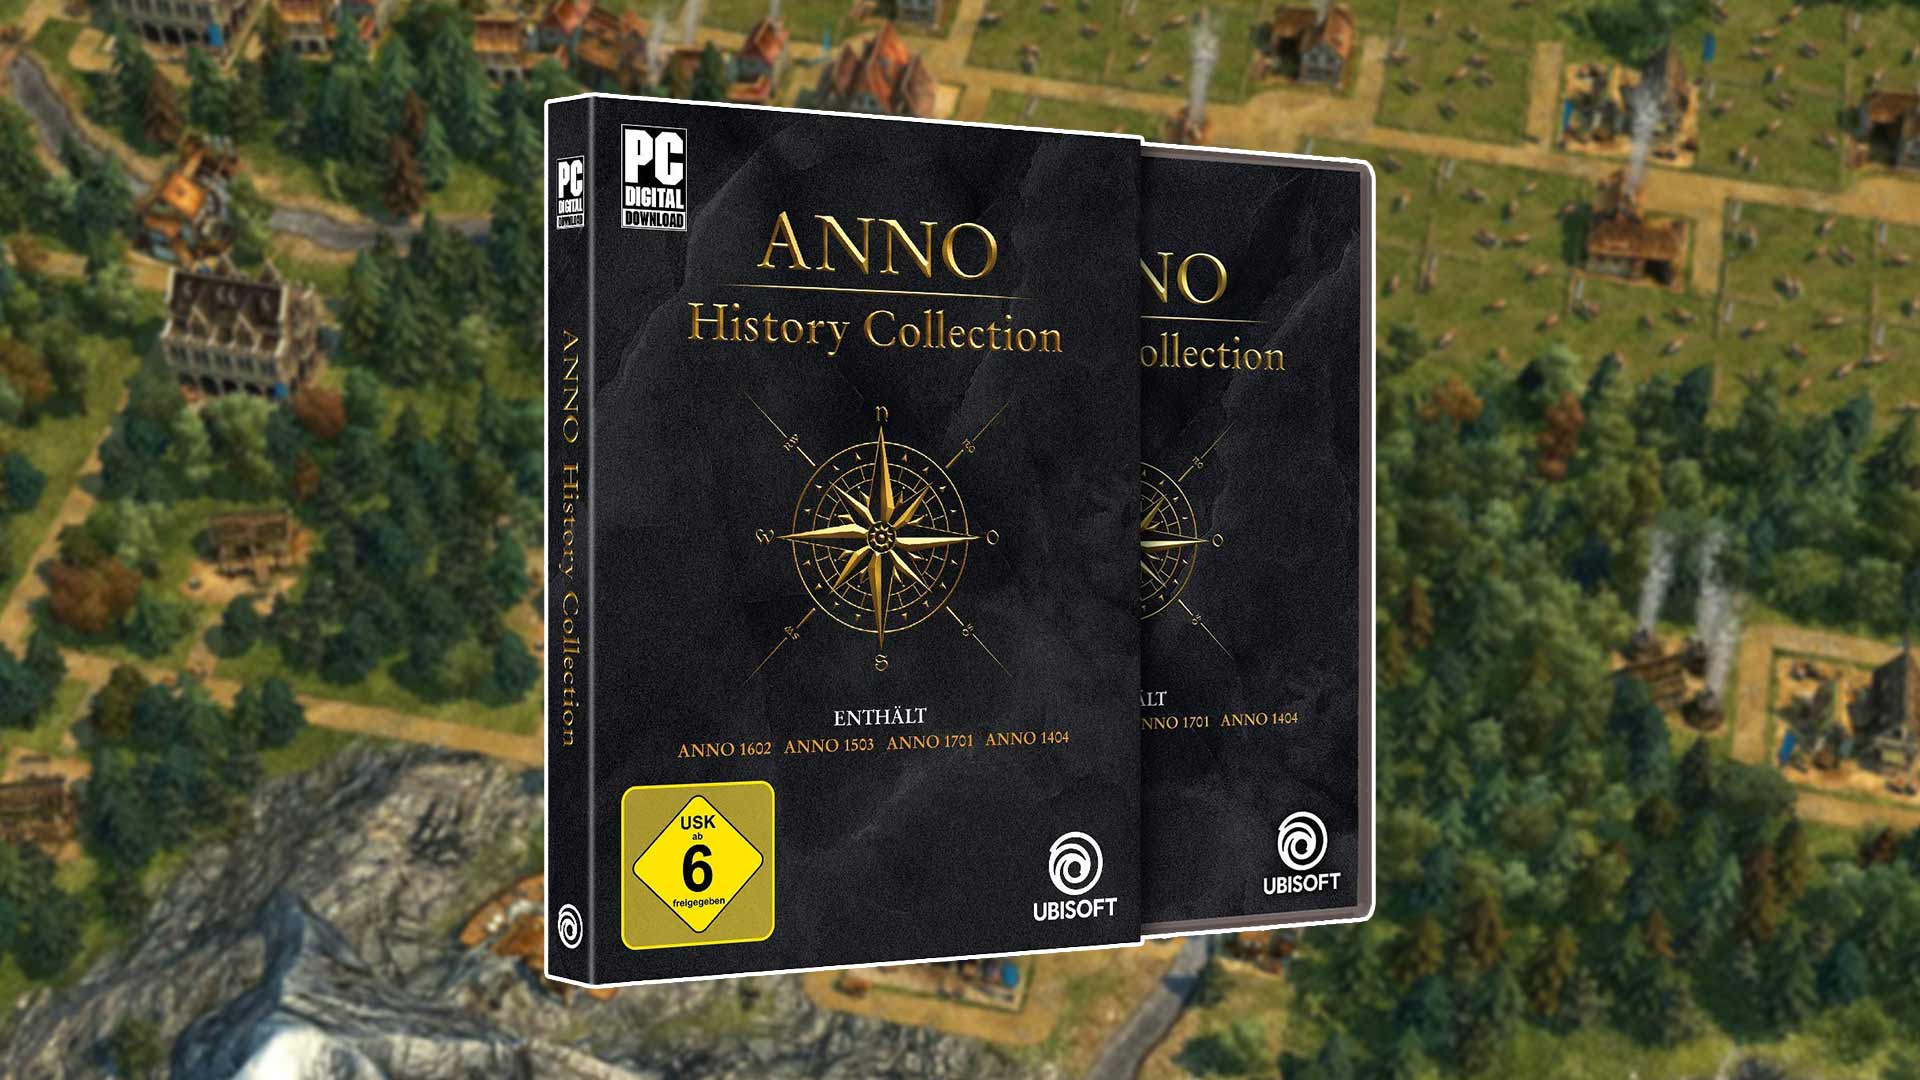 Collection Anno Amazon Euro mit 15 jetzt History Rabatt Angebot: